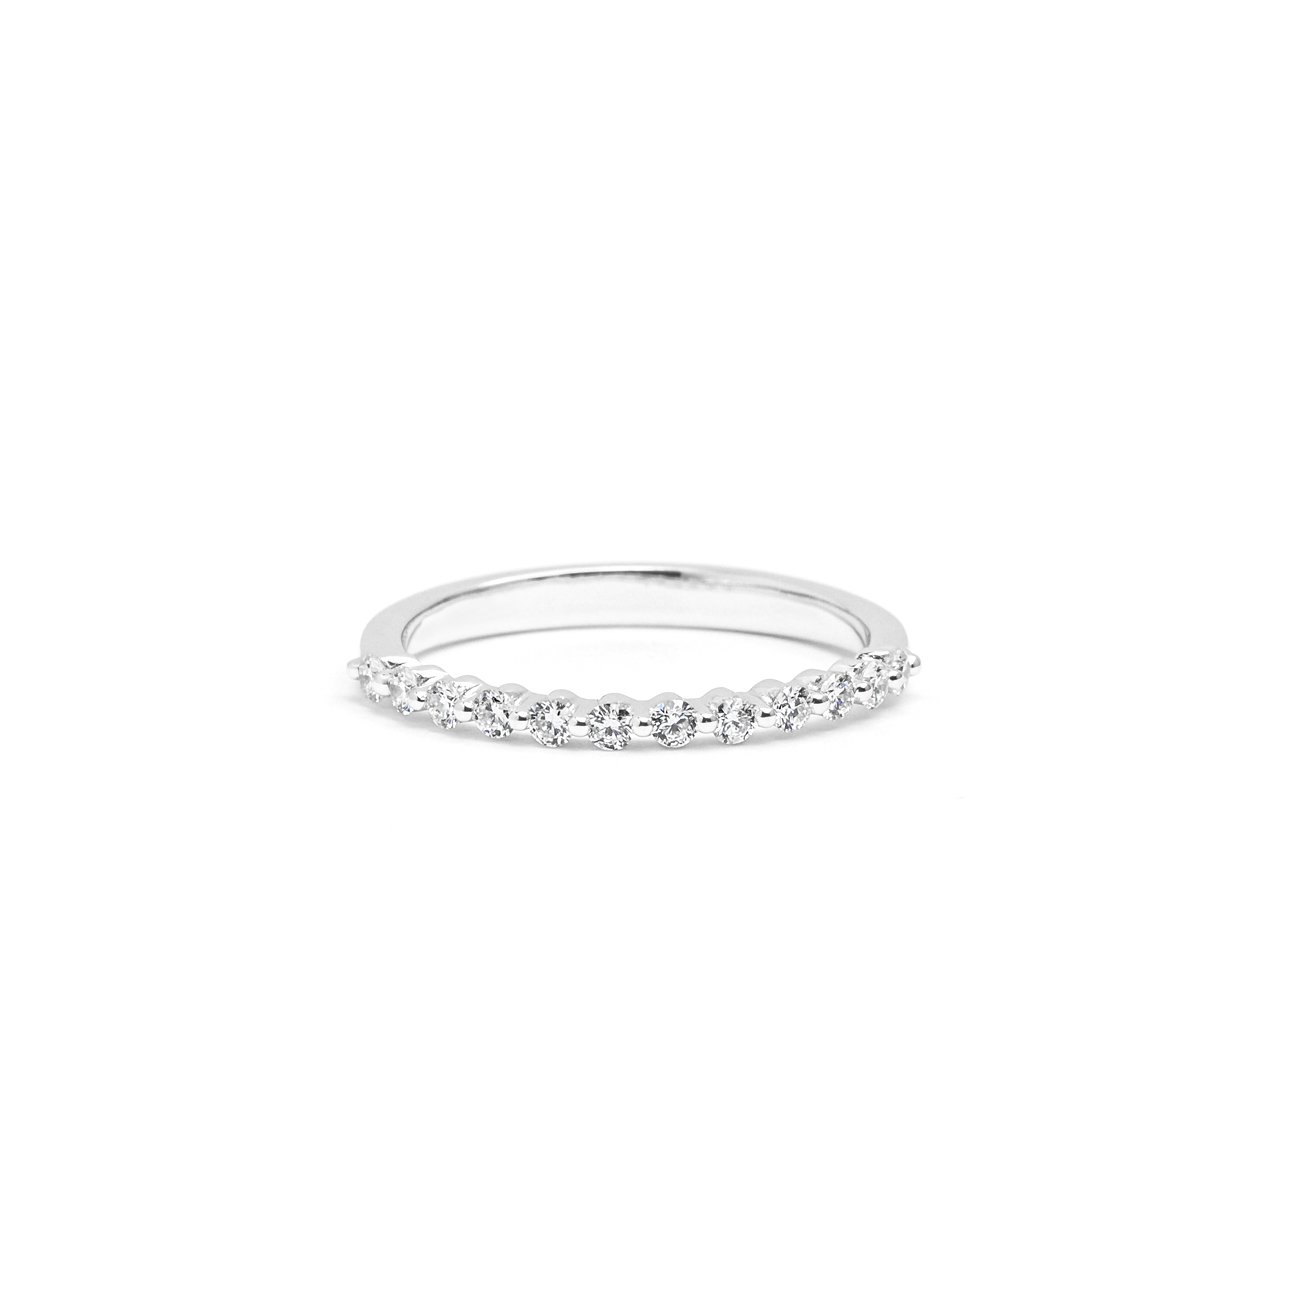 Petite Floating Diamond Ring Ring Princess Bride Diamonds 3 14K White Gold 